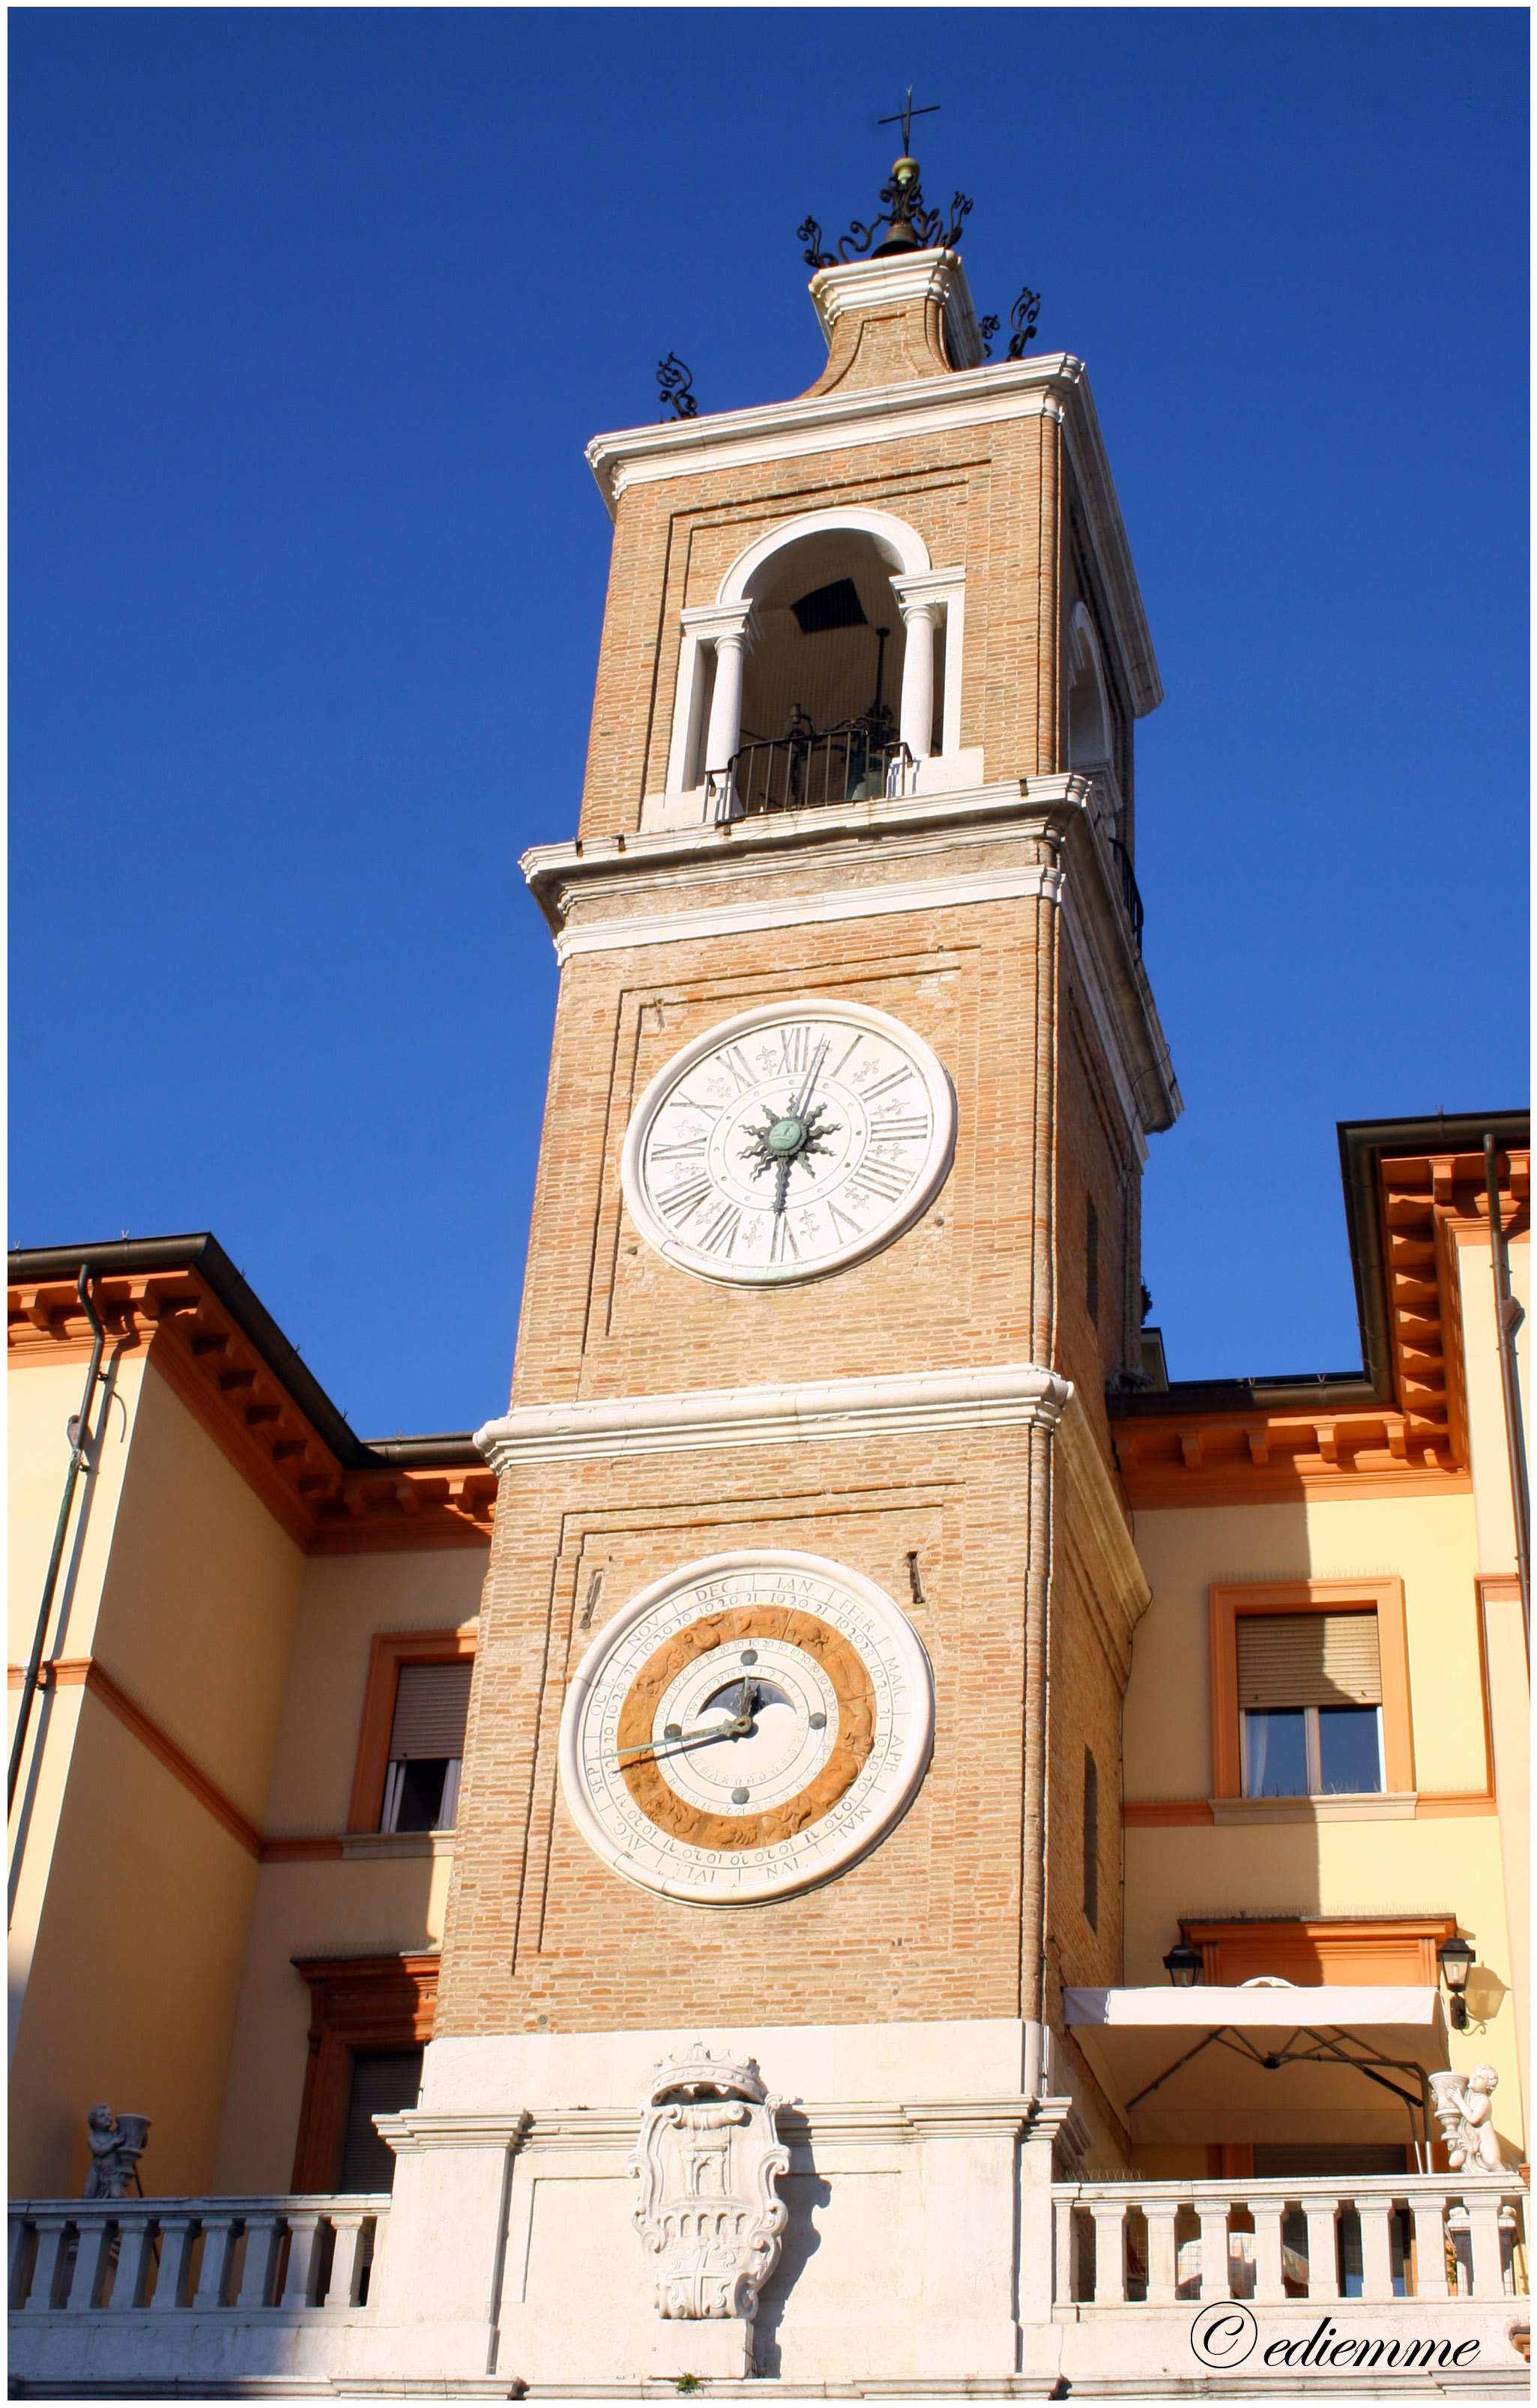 photo: https://upload.wikimedia.org/wikipedia/commons/c/c8/Torre_dell%27Orologio_-_Rimini.jpg